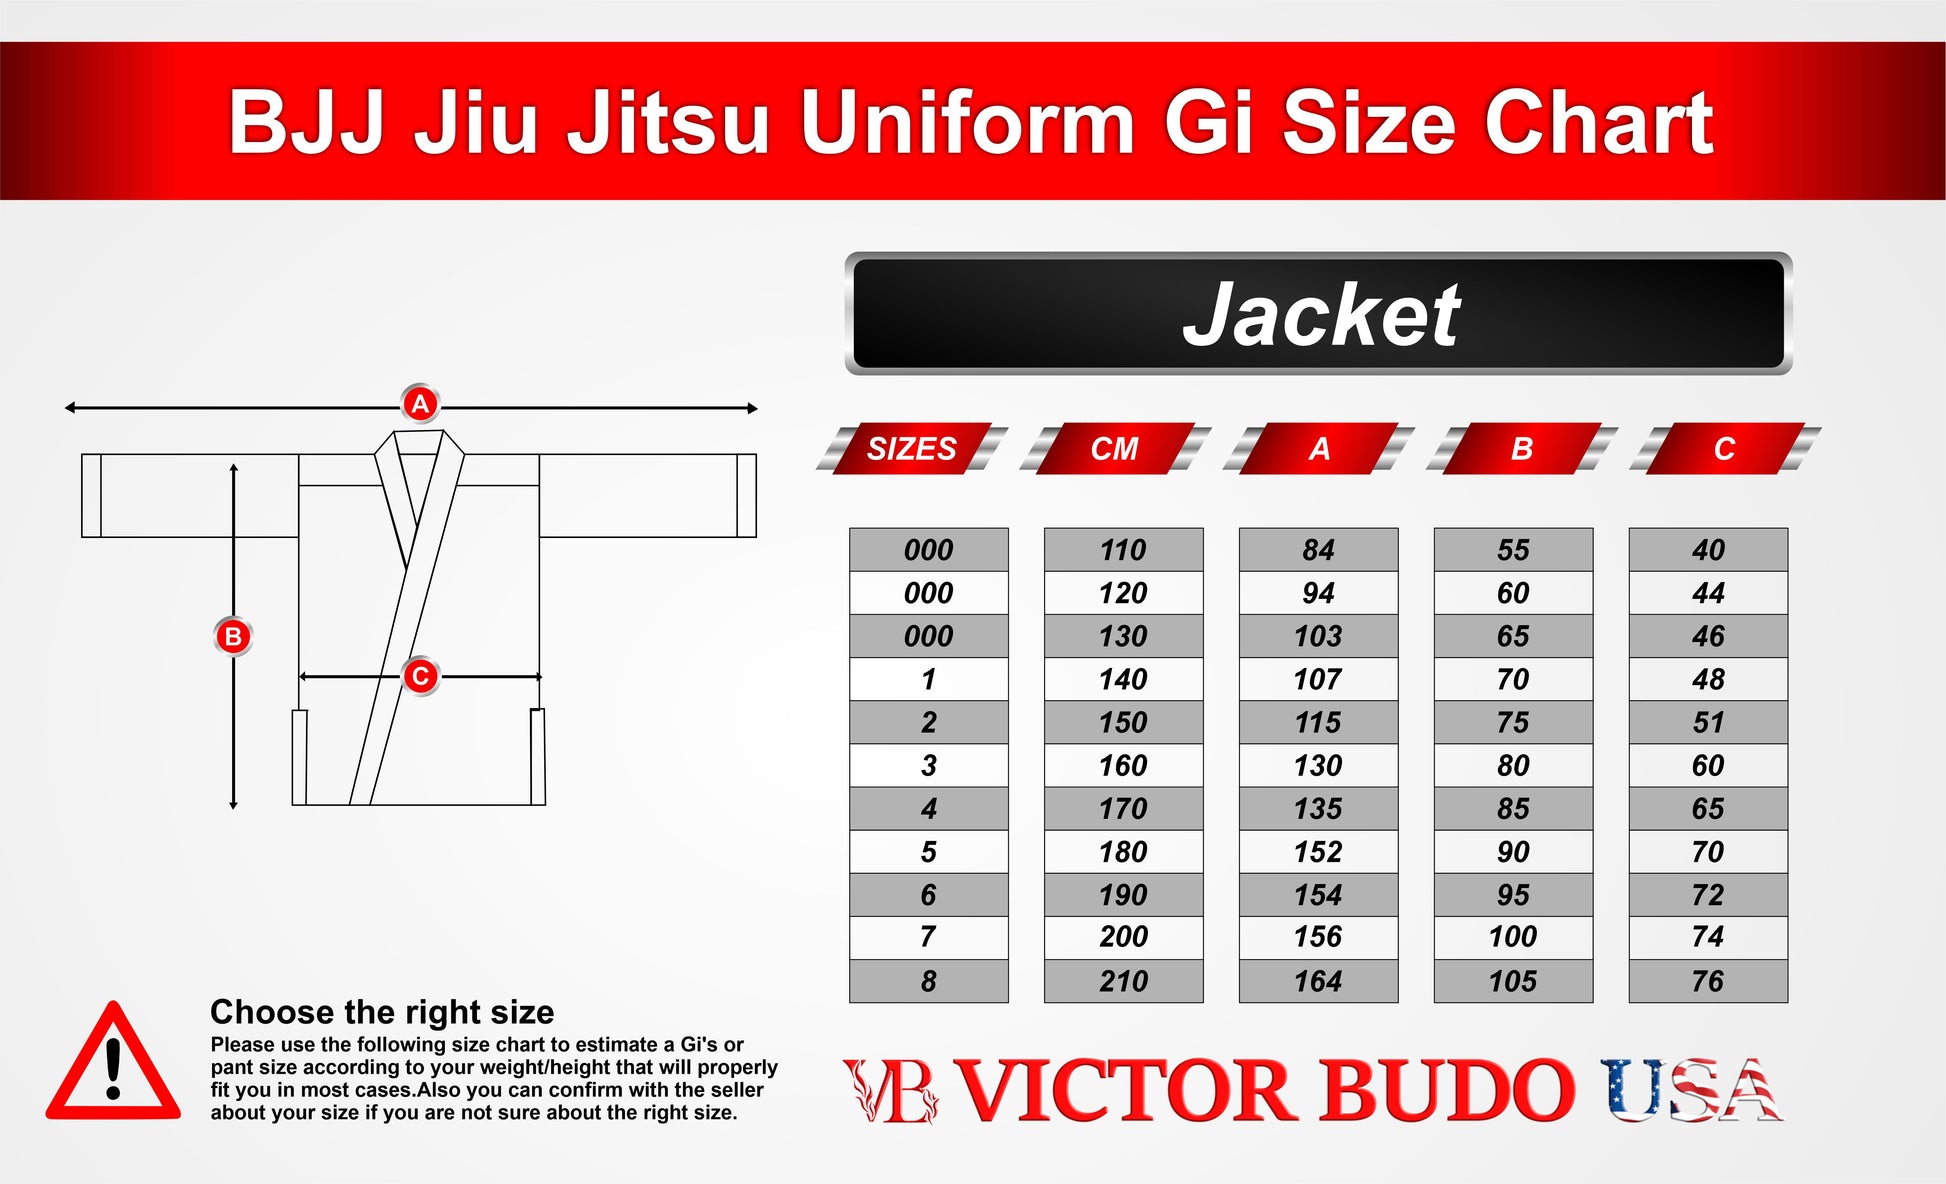 mma-brazilian-gi-uniforms-jiu-jitsu-gis-550-gsm-size-jacket-chart